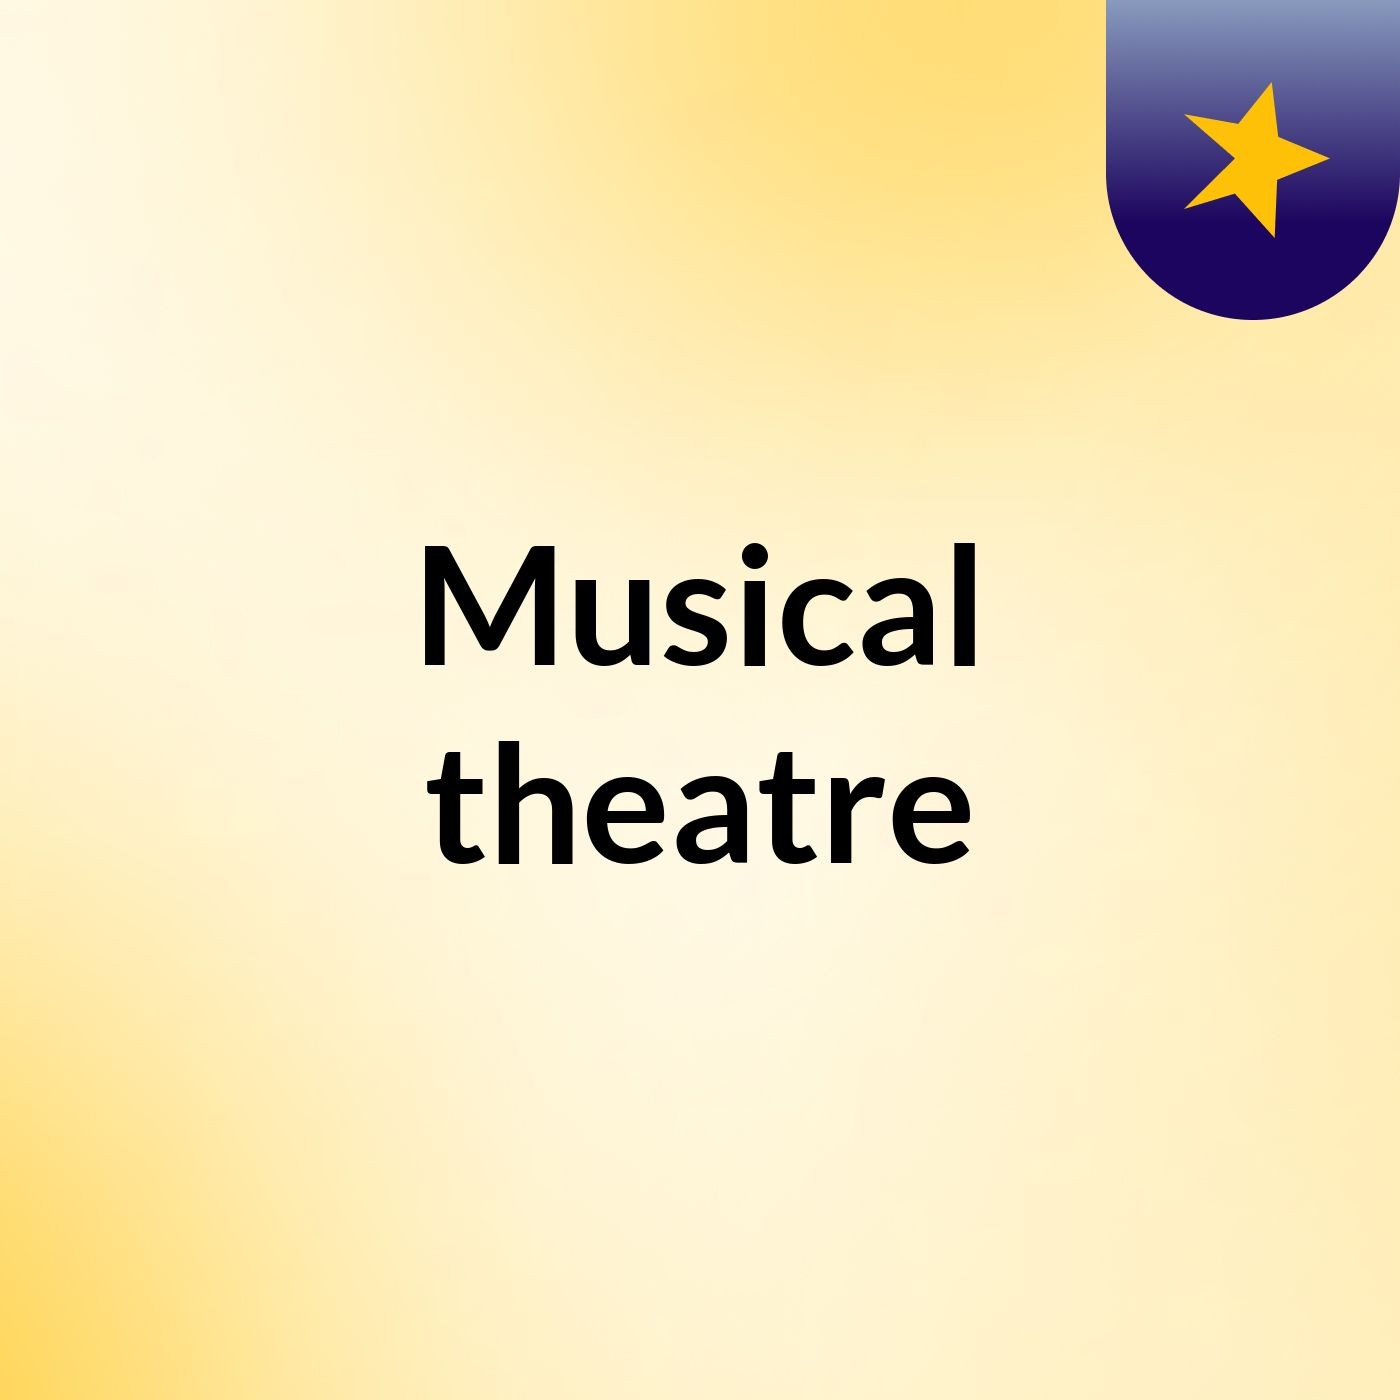 Musical theatre